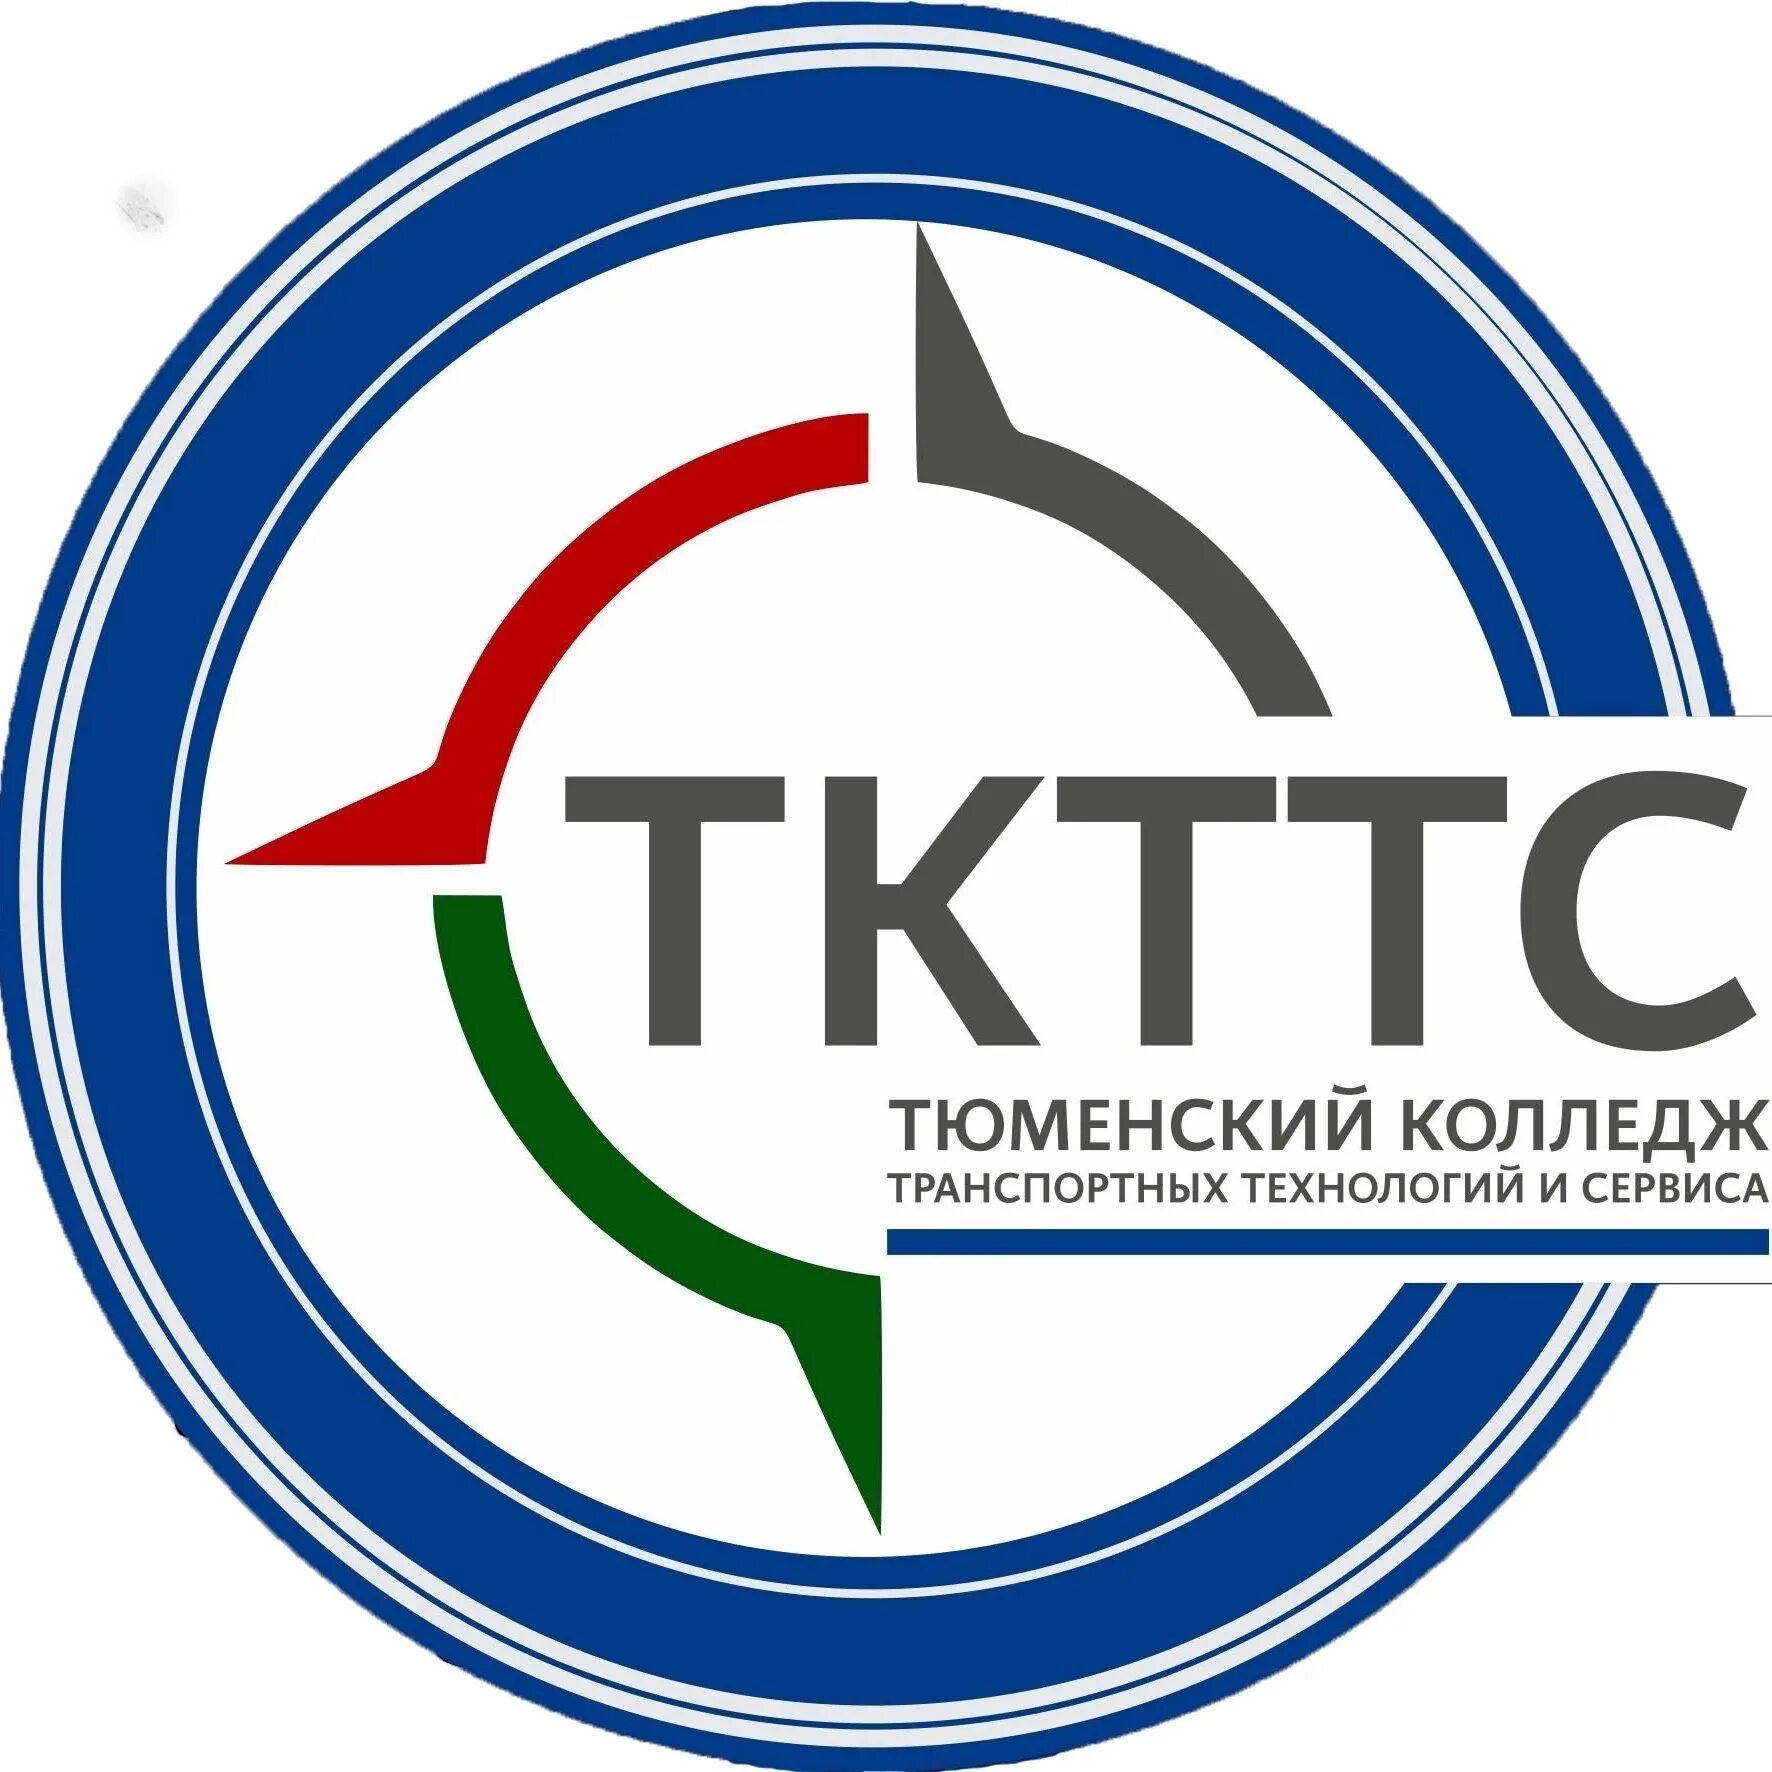 Сайт ткттс тюмень. Колледж транспортных технологий Тюмень. Тюменский колледж ГАПОУ то ТКТТС. Транспортный колледж Тюмень. Логотип ТКТТС.